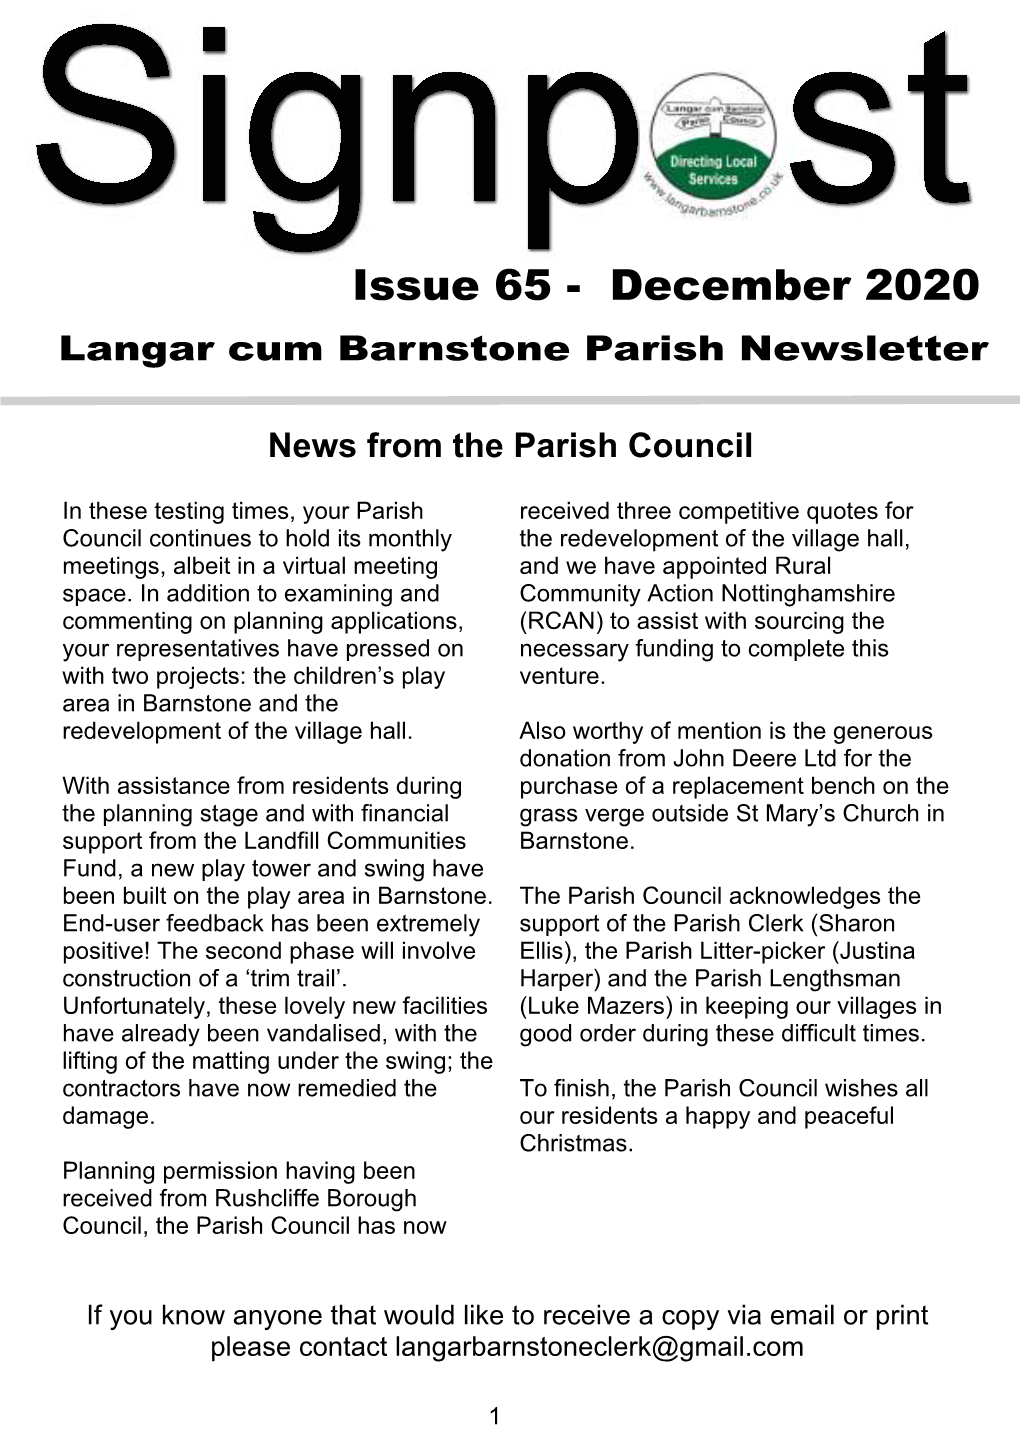 Issue 65 - December 2020 Langar Cum Barnstone Parish Newsletter